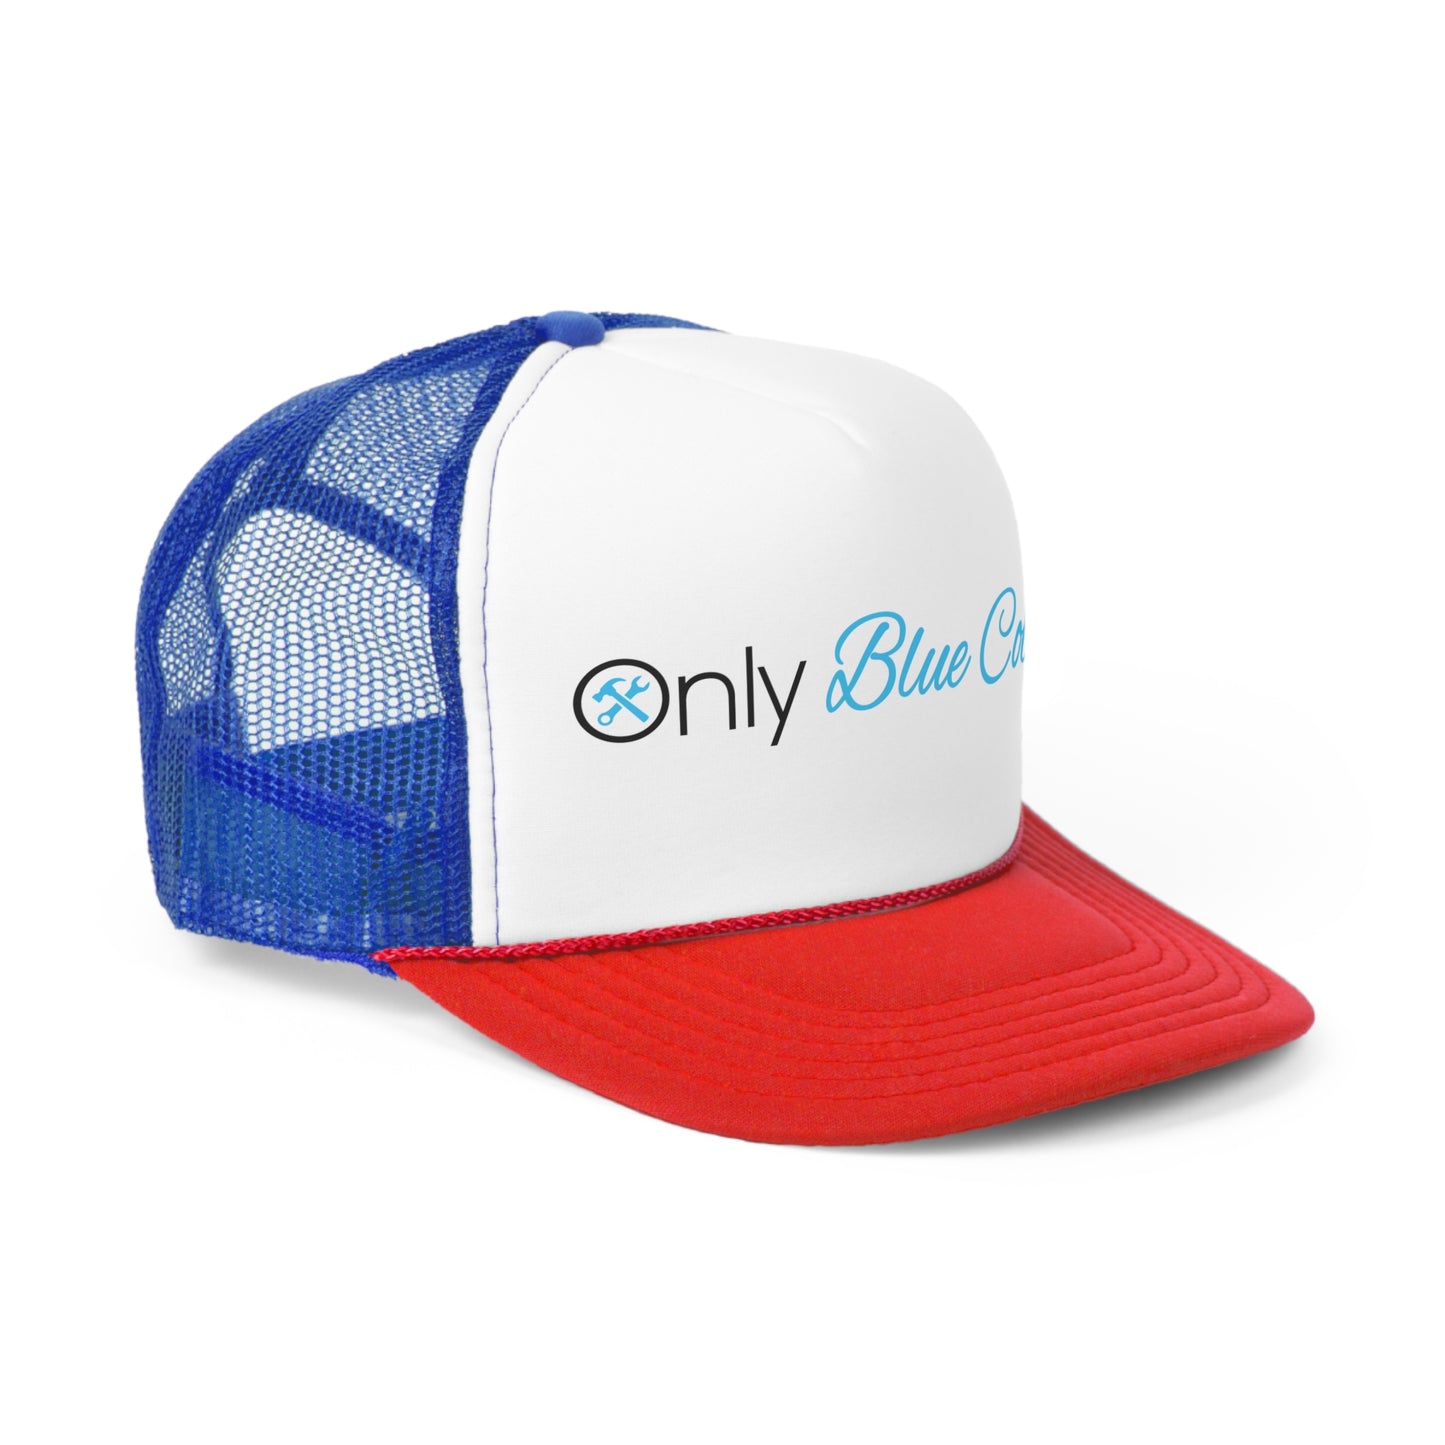 Only Blue Collar - Trucker Caps